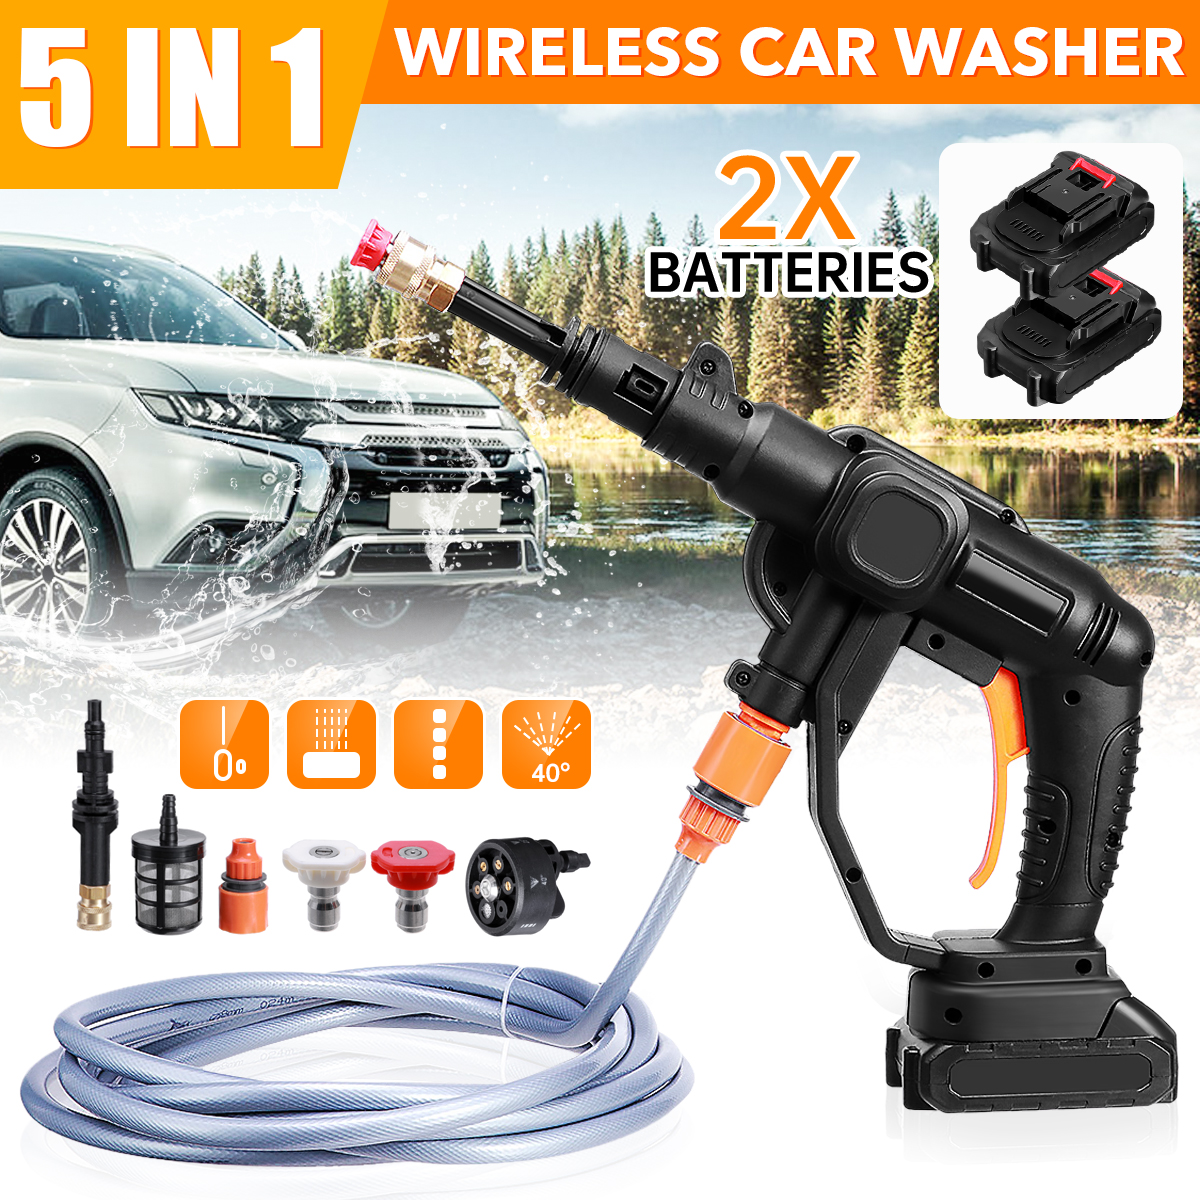 21V-Cordless-High-Pressure-Cleaner-Car-Washer-Spray-Guns-Water-Sprayer-Car-Washing-Machine-W-None12p-1854123-2